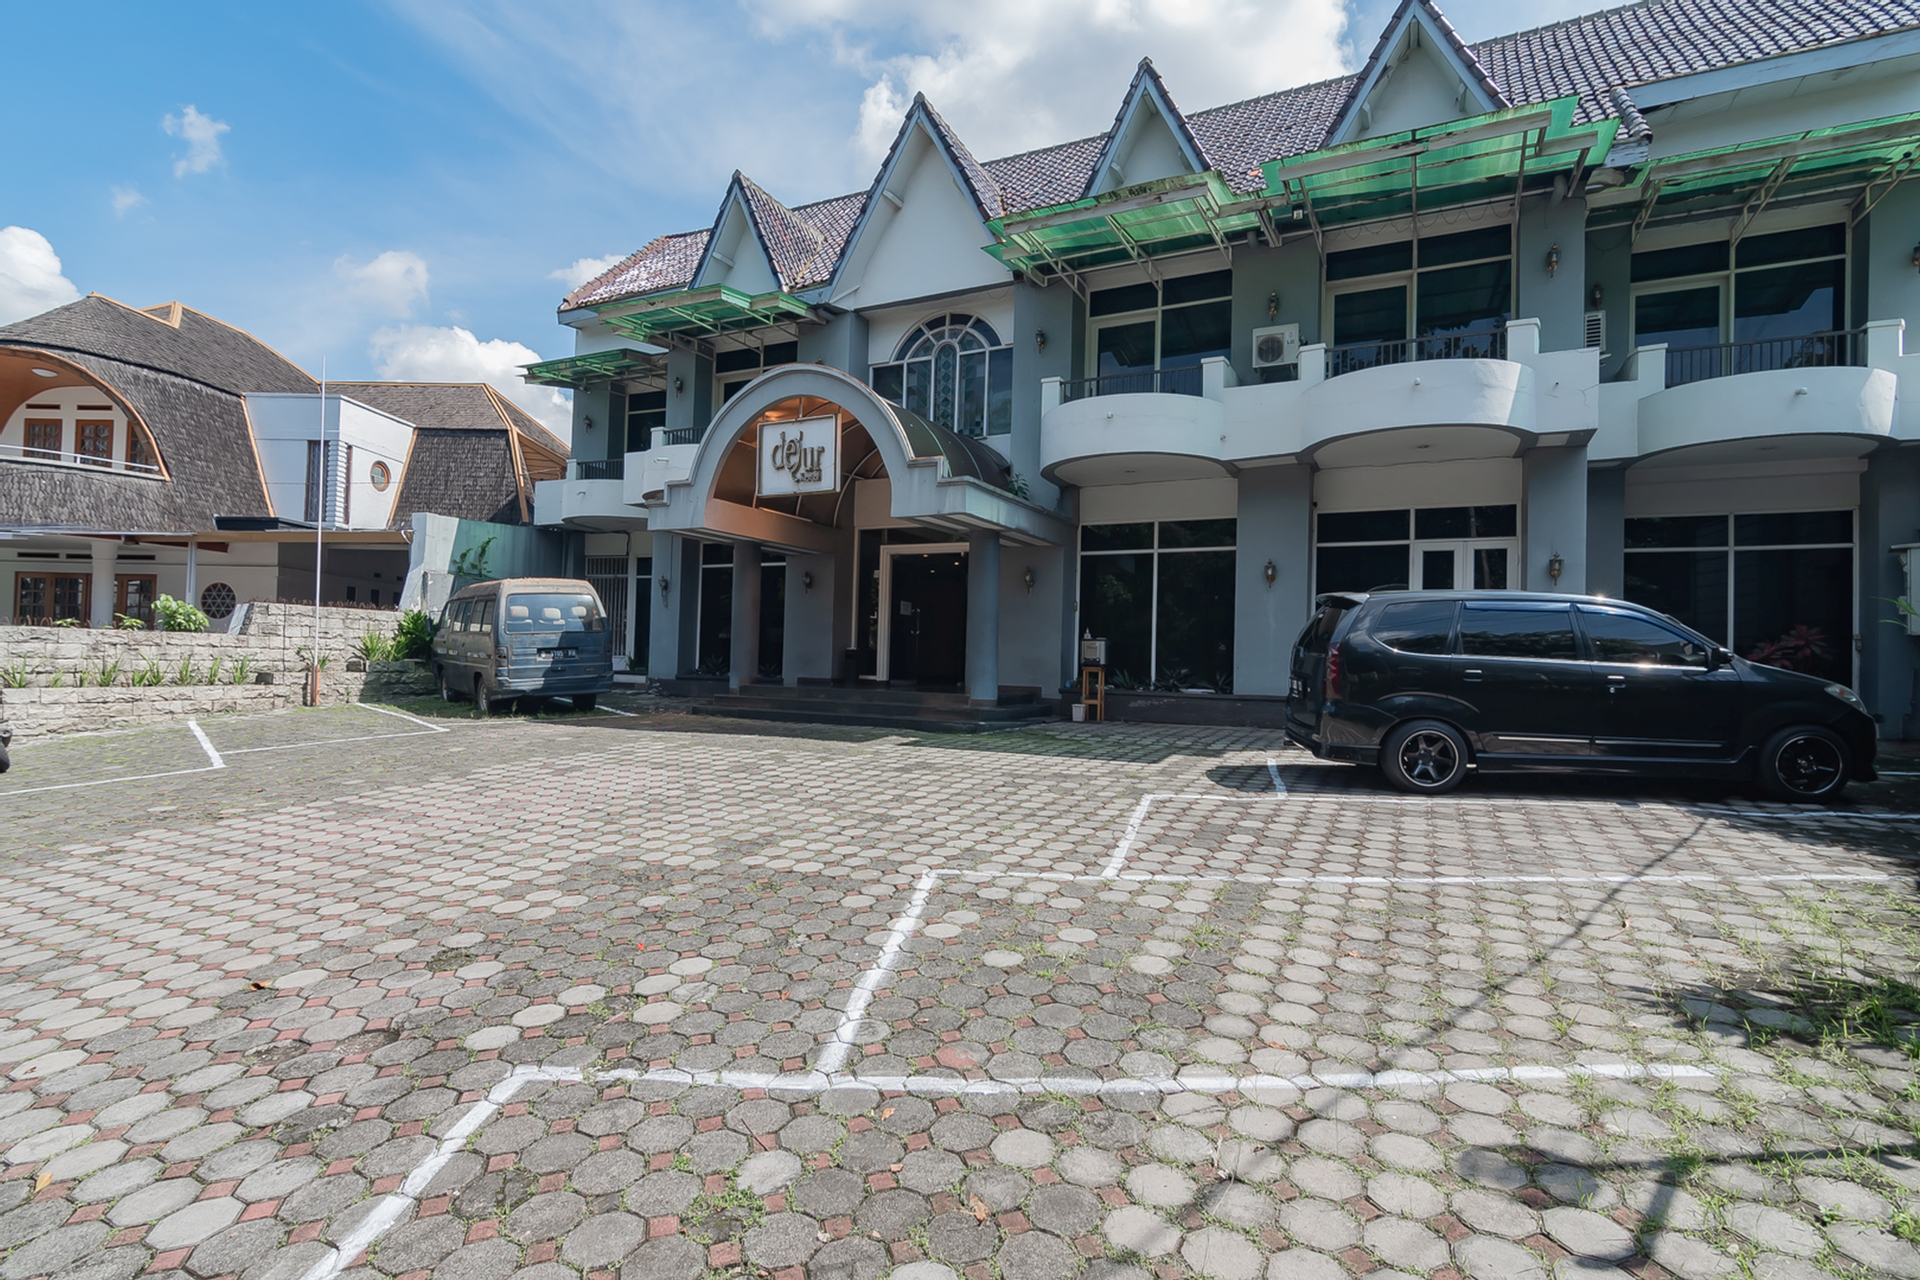 Dequr Hotel, Bandung